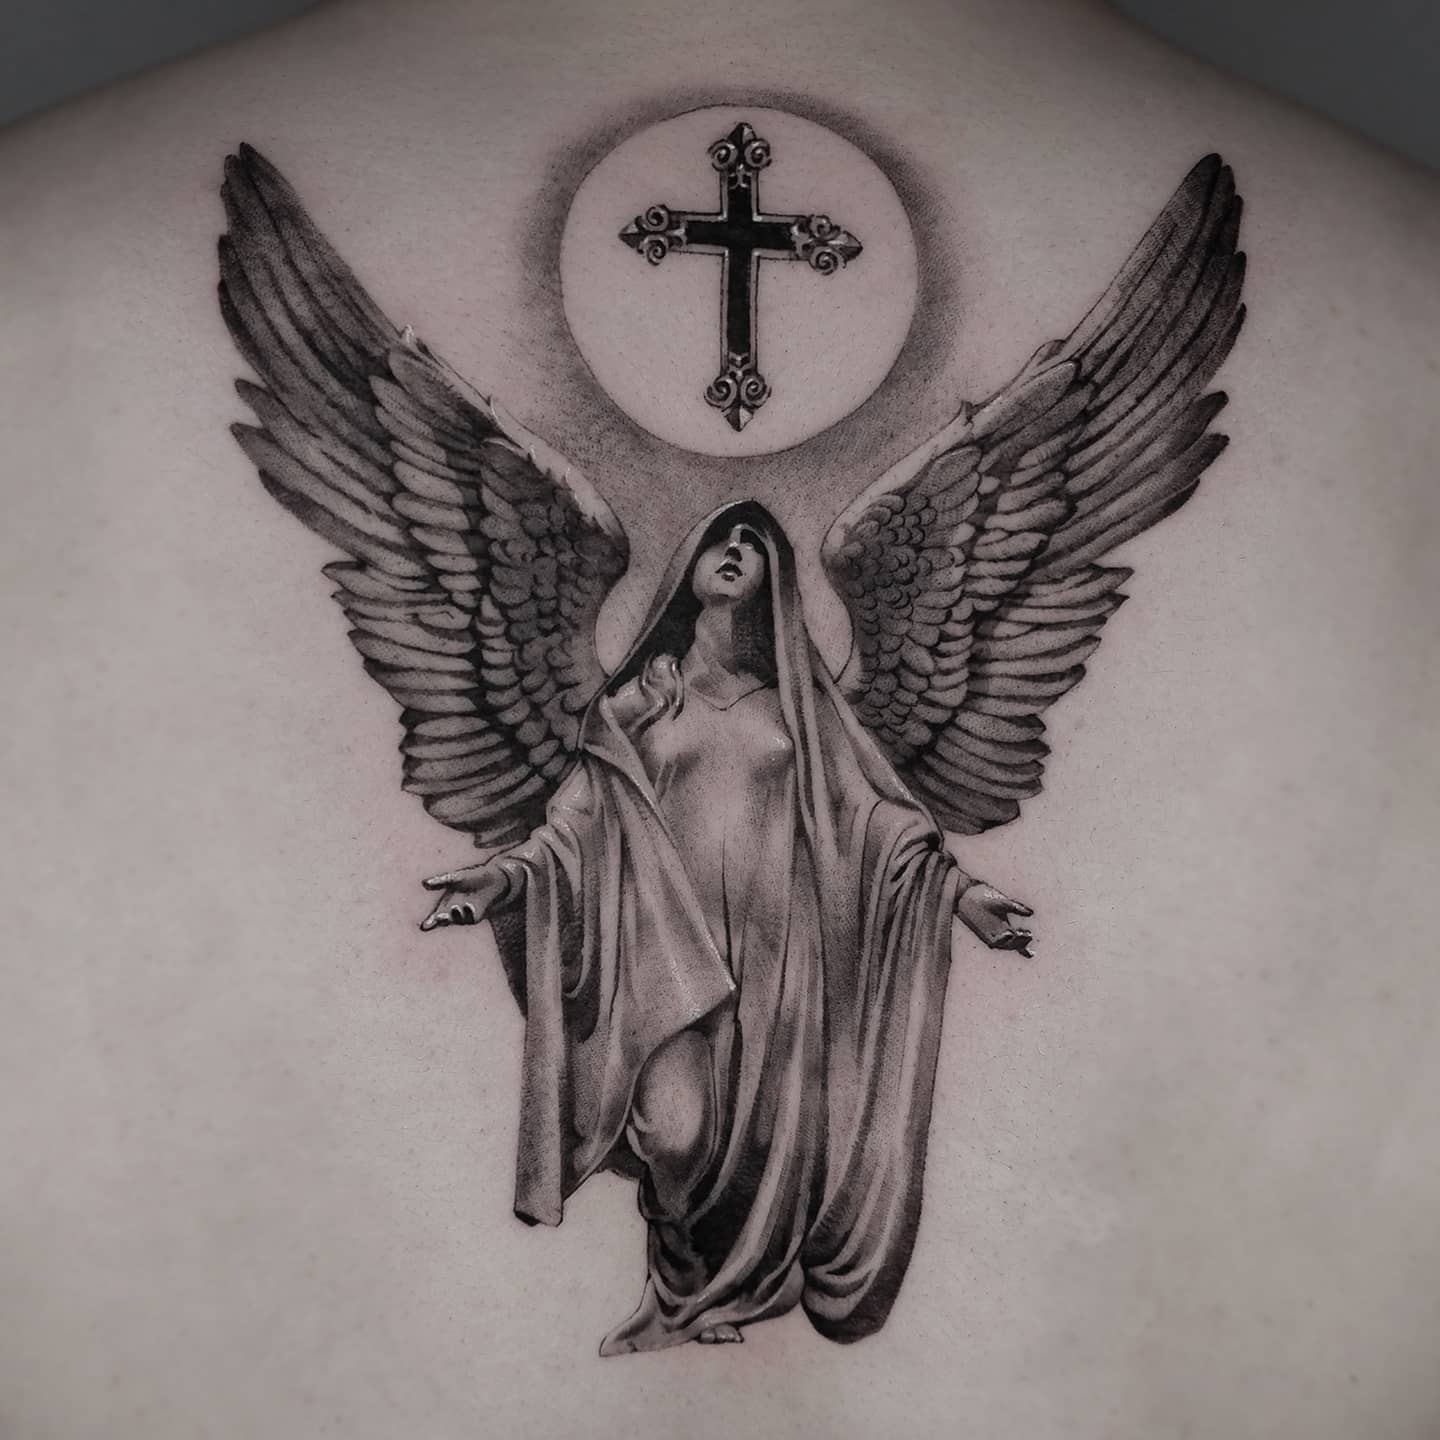 Realistic cross design by tattooist hwi